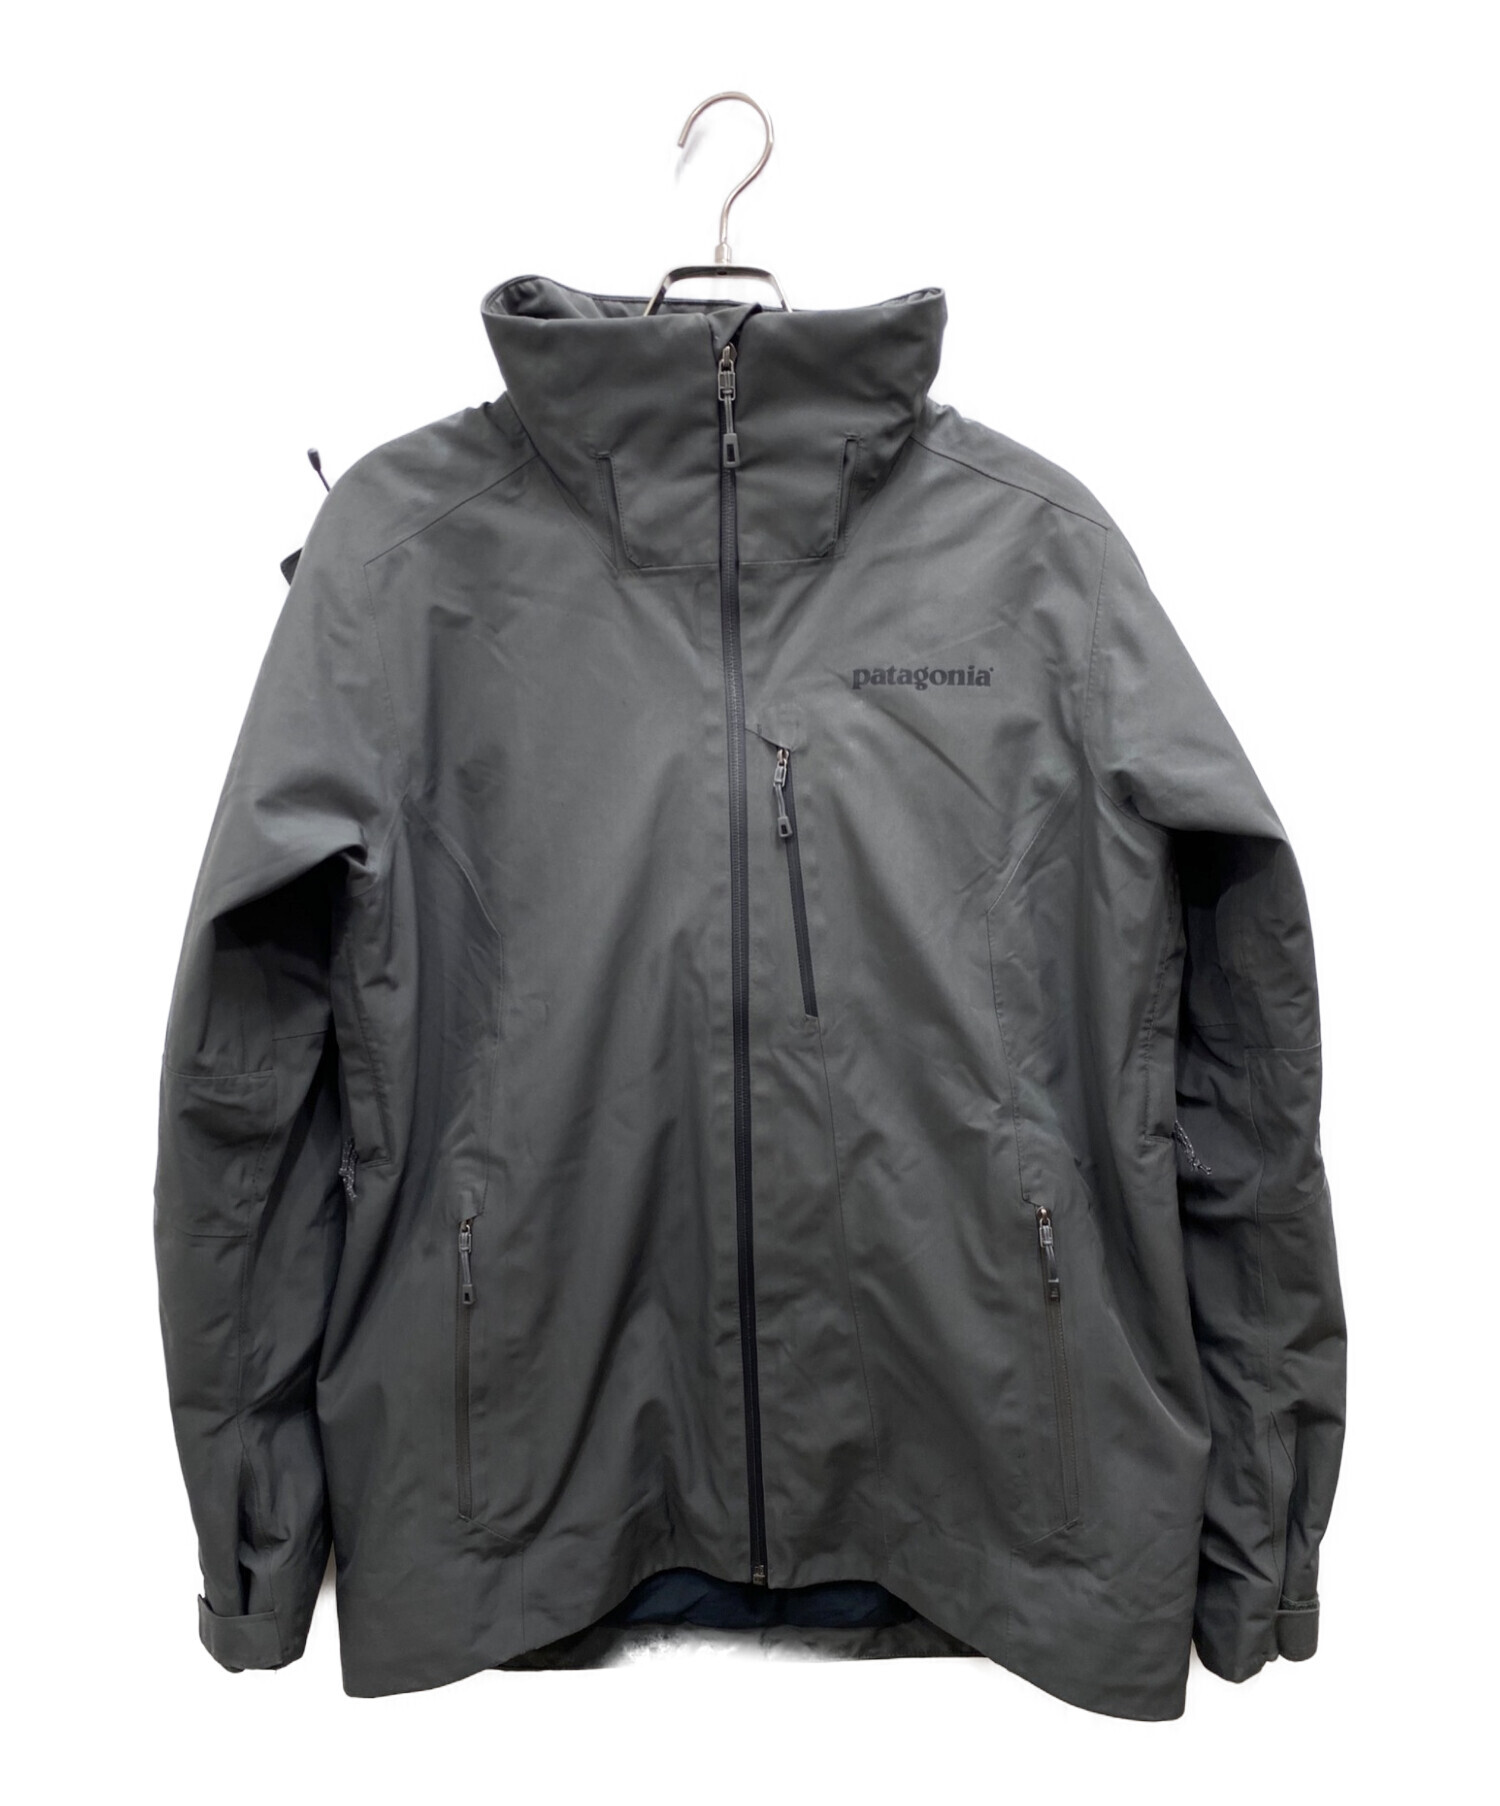 Patagonia (パタゴニア) GORE-TEX insulated powder bowl jacket グレー サイズ:S